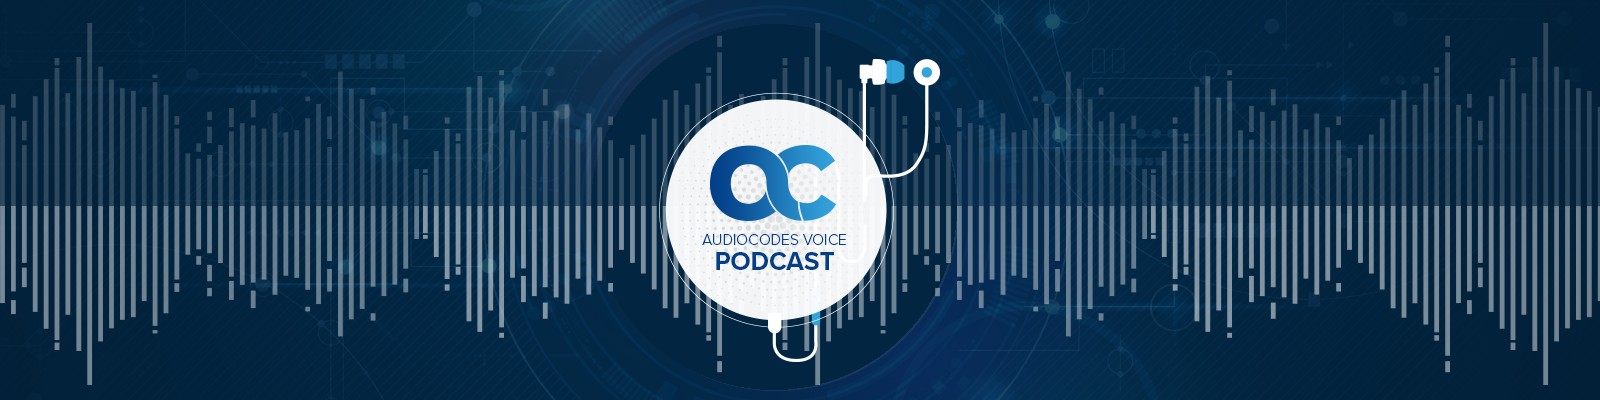 AudioCodes Voice Podcast Media